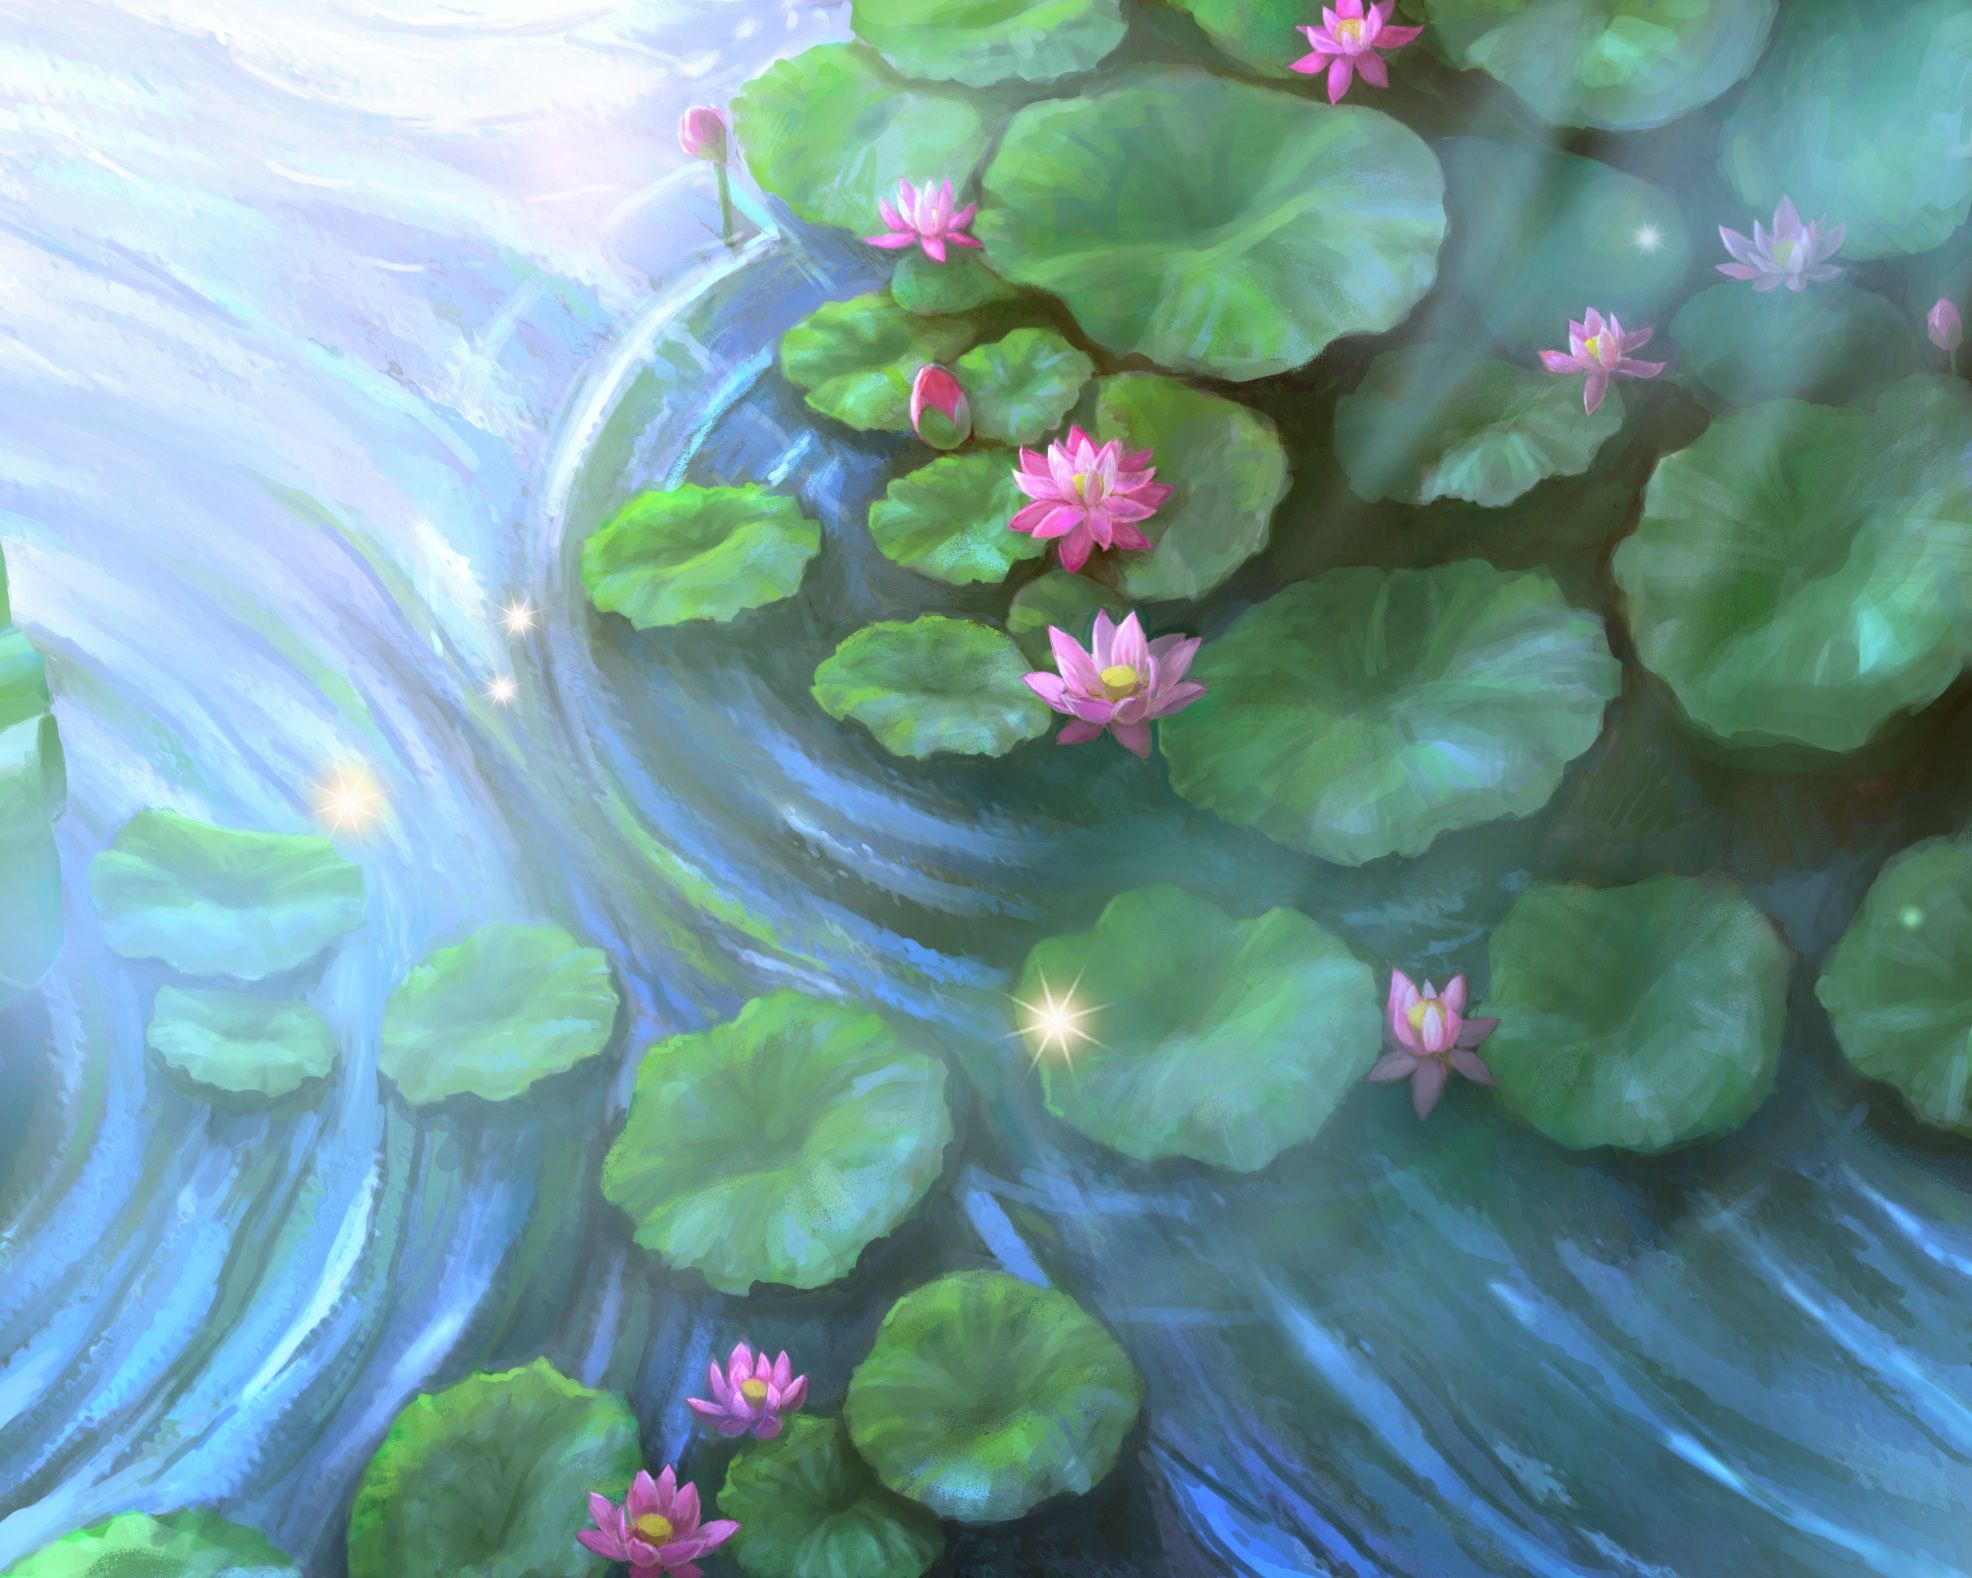 Anime Lotus Pond wallpaper free. Pond painting, Gold fish painting, Painting